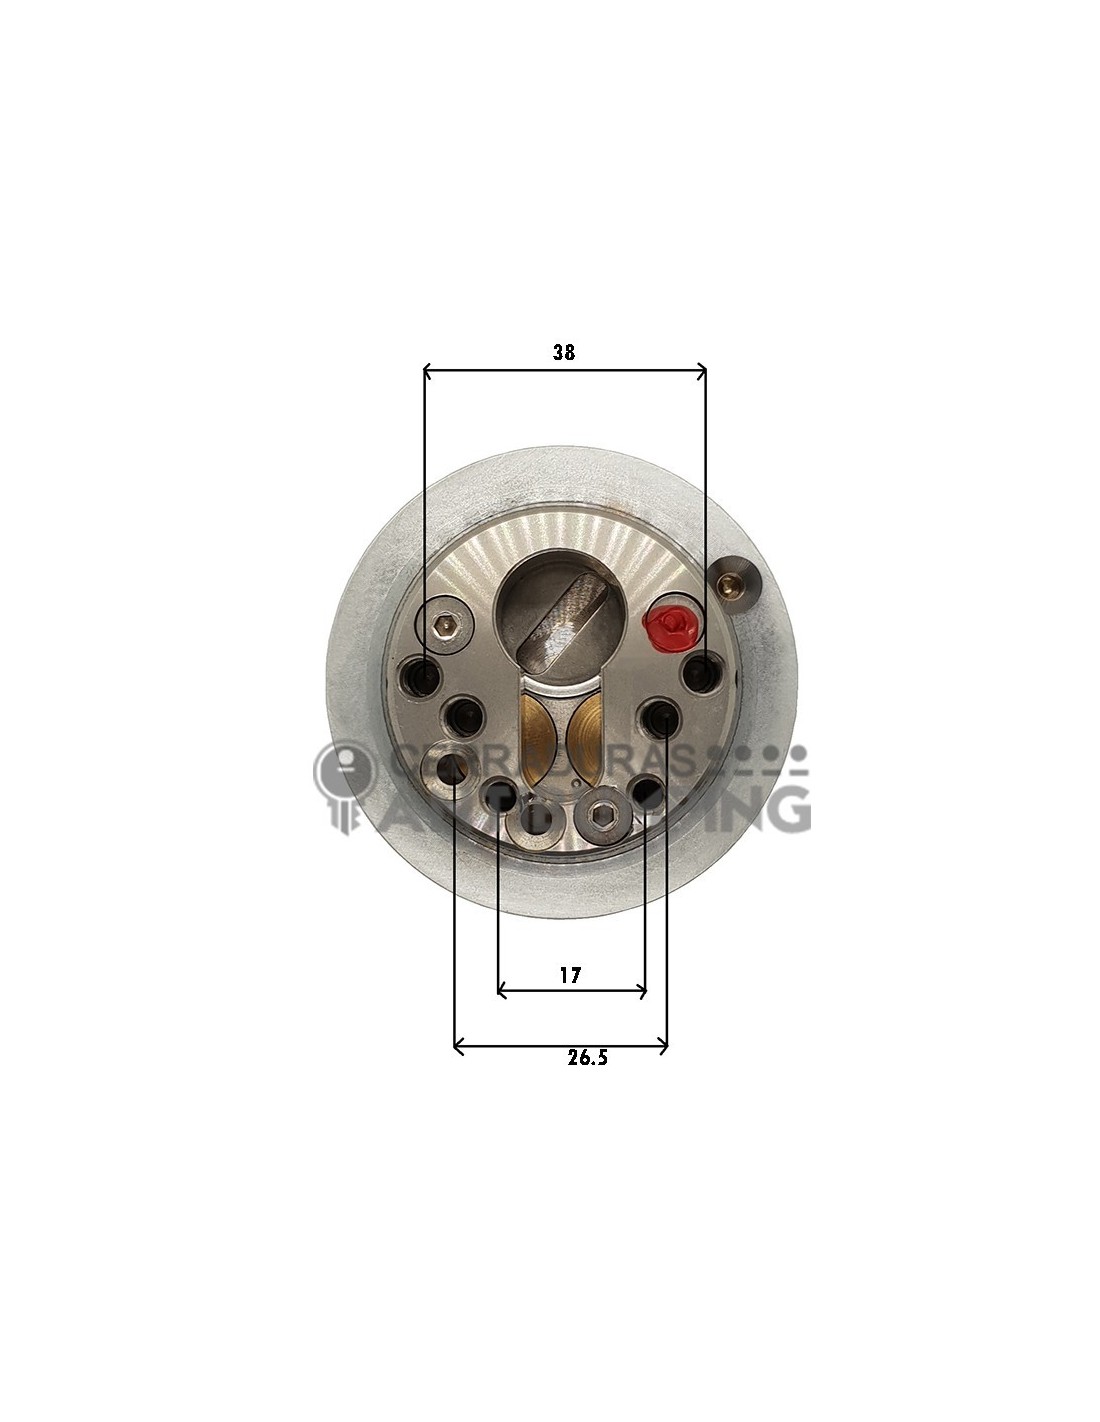 Escudo Magnético DISEC LGMRM29EZ - Cerradura Plus